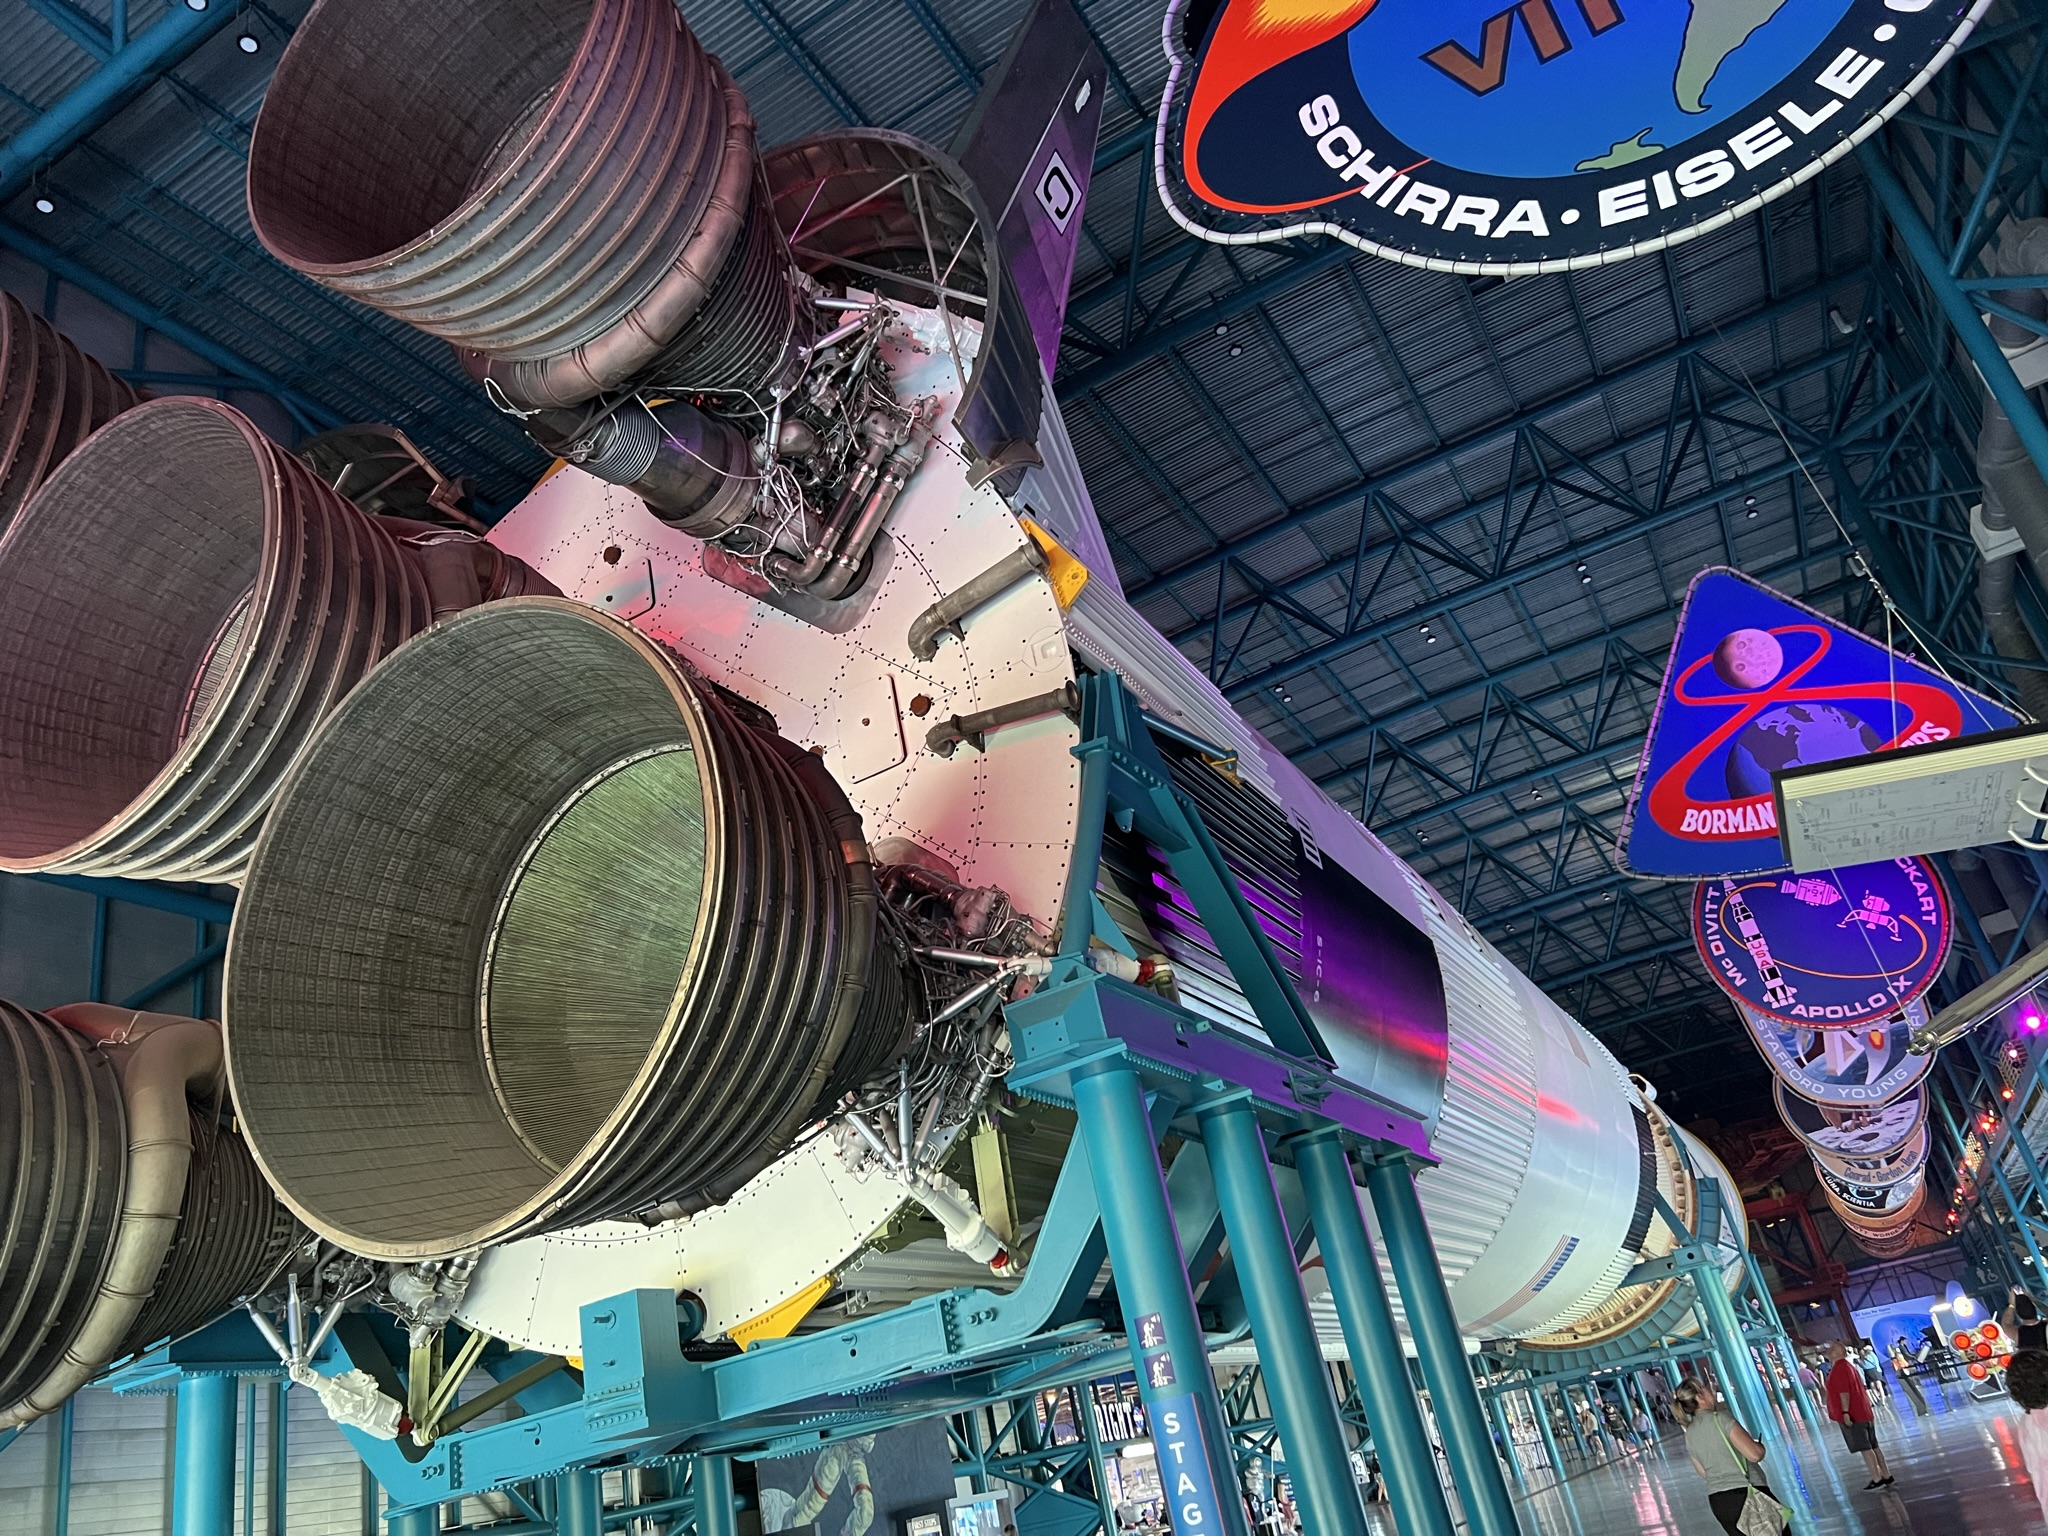 Cruise Excursion Shorts – Kennedy Space Center Apollo Center – Apollo Saturn 5 Rocket Display